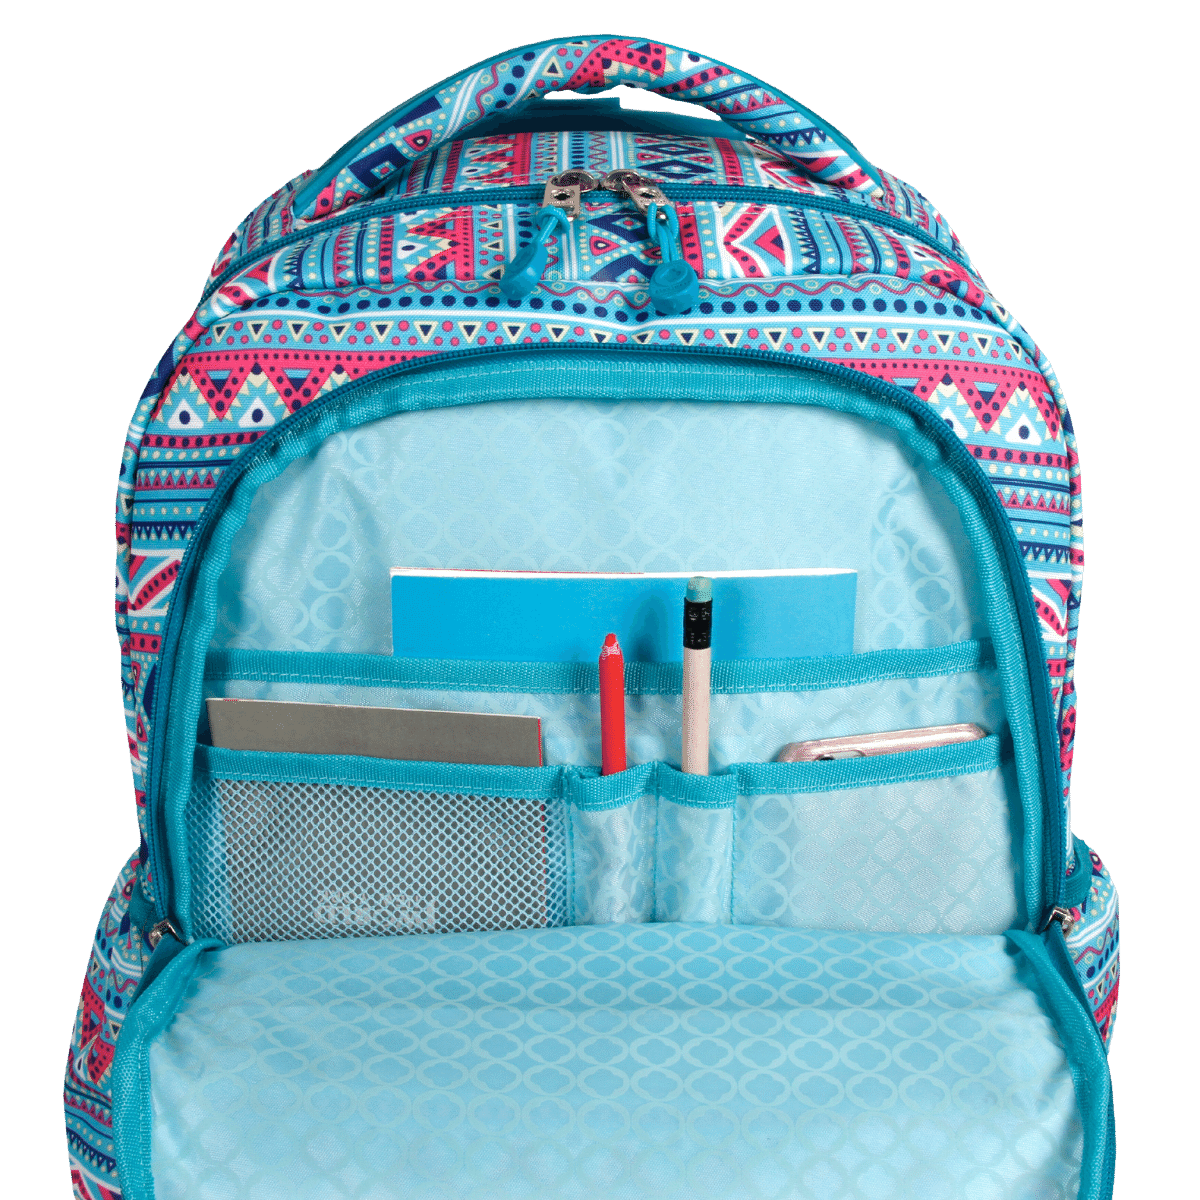 Sweep Rolling Backpack (18 Inch) - JWorldstore